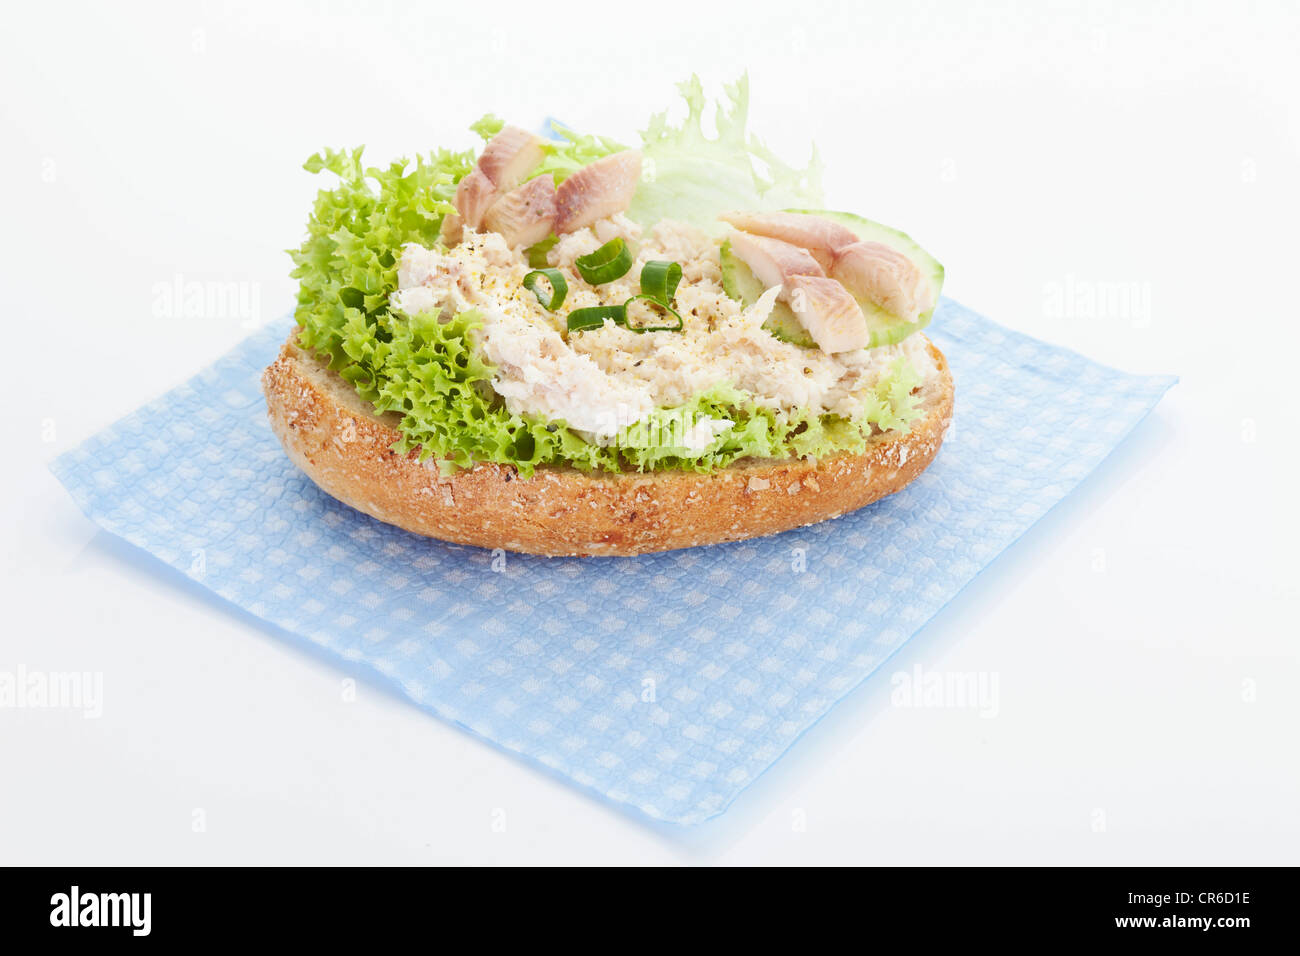 Trout fillet tartar sandwich on napkin, close up Stock Photo